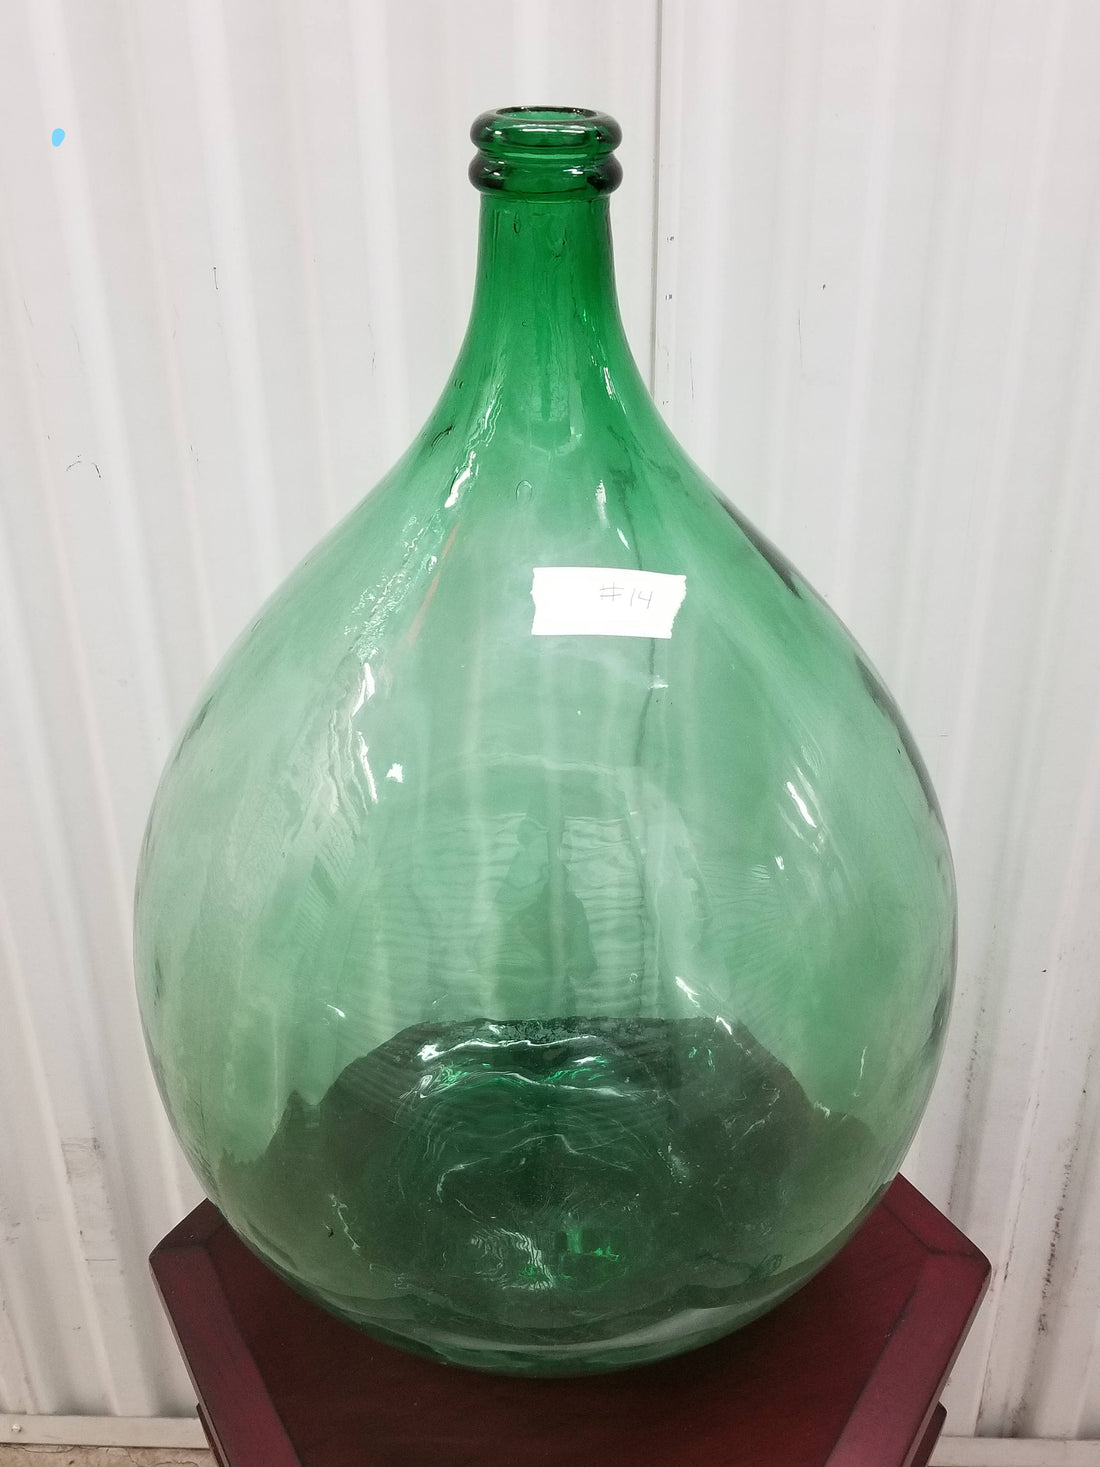 Vintage Medium/Large Size Italian Glass Demijohn Wine Jug #14 with Rod Iron Topper